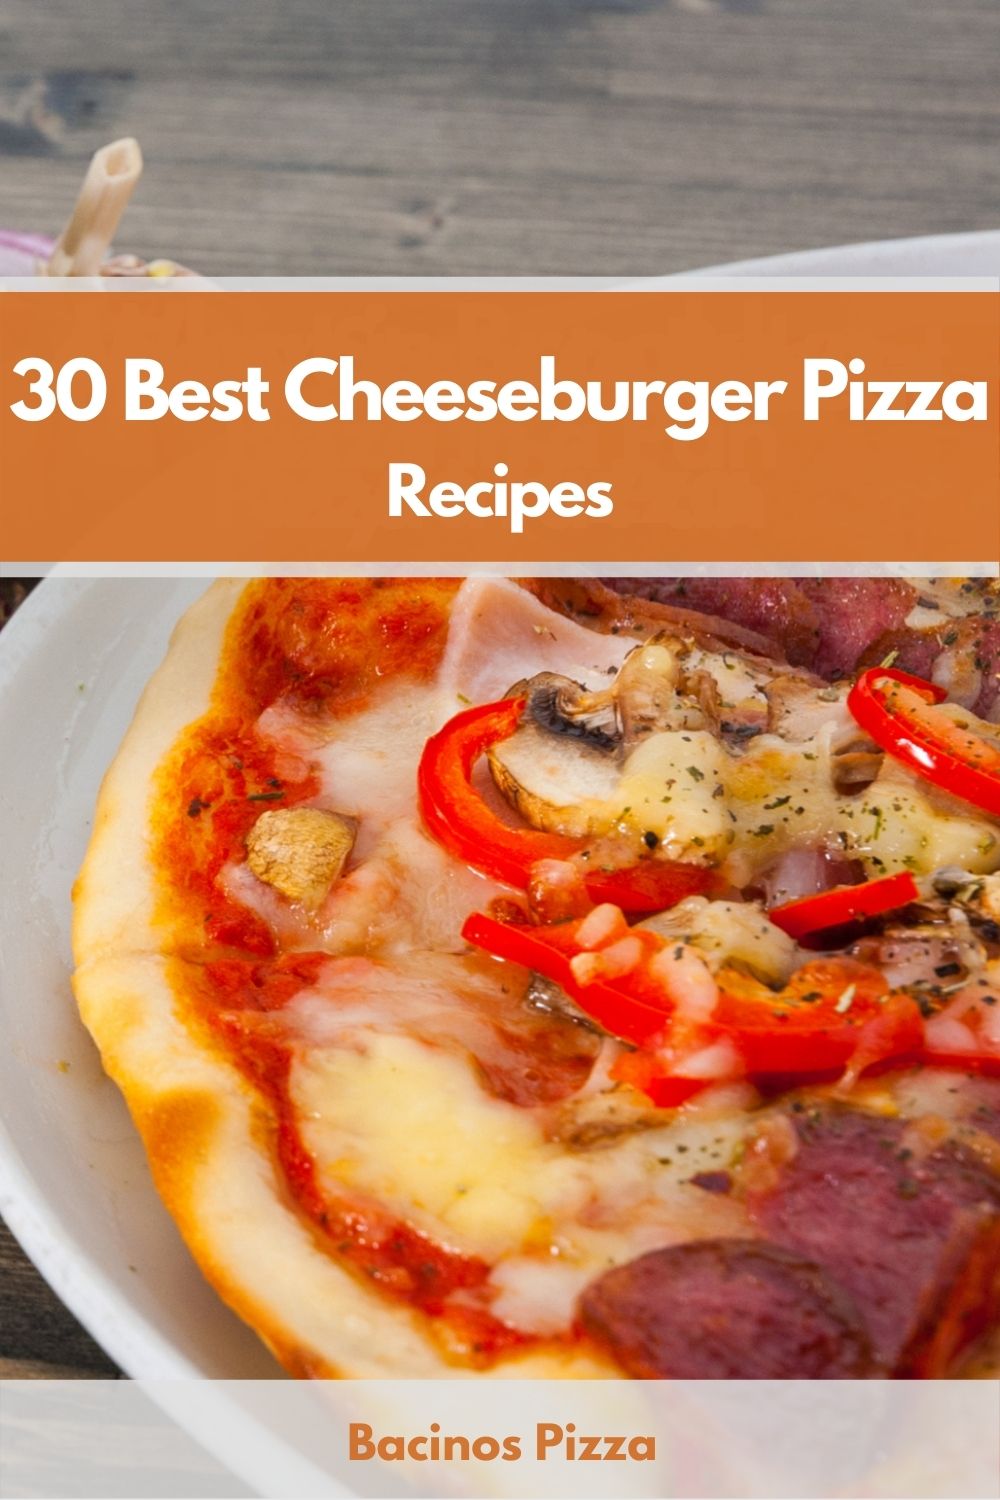 30 Best Cheeseburger Pizza Recipes pin